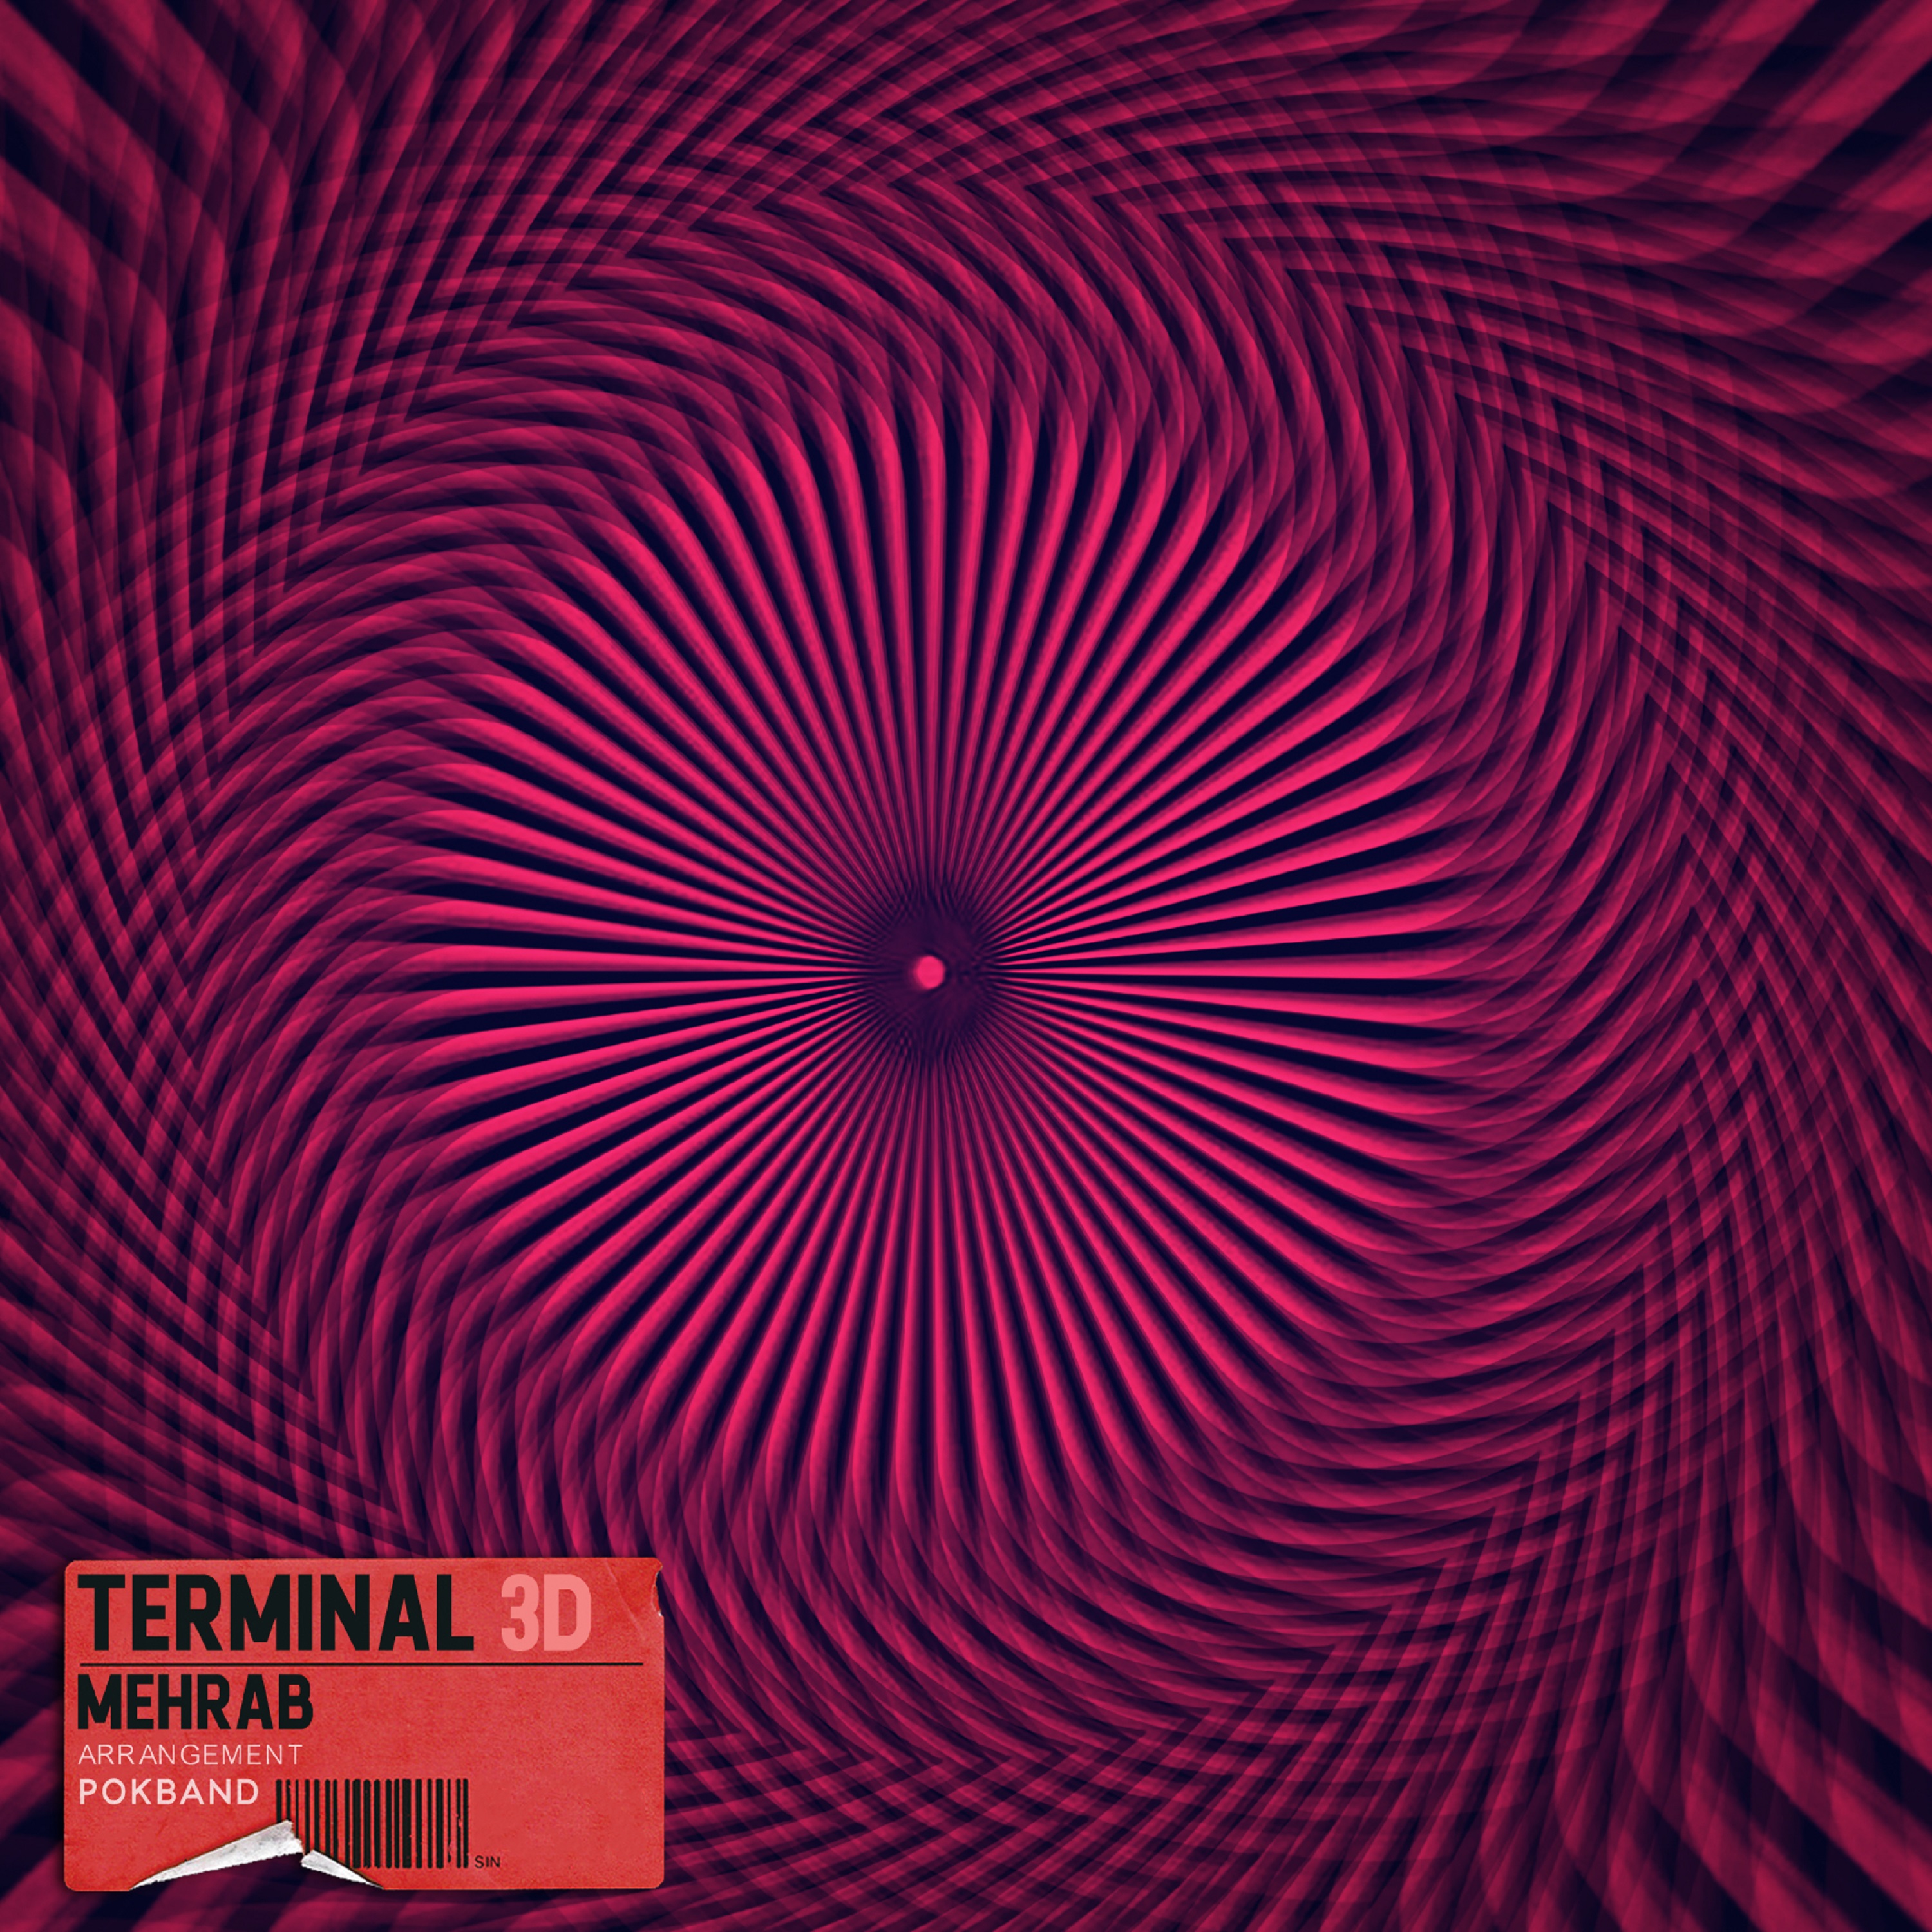  دانلود آهنگ جدید مهراب - ترمینال - ورژن ۳ بعدی | Download New Music By Mehrab - Terminal (3D Version)